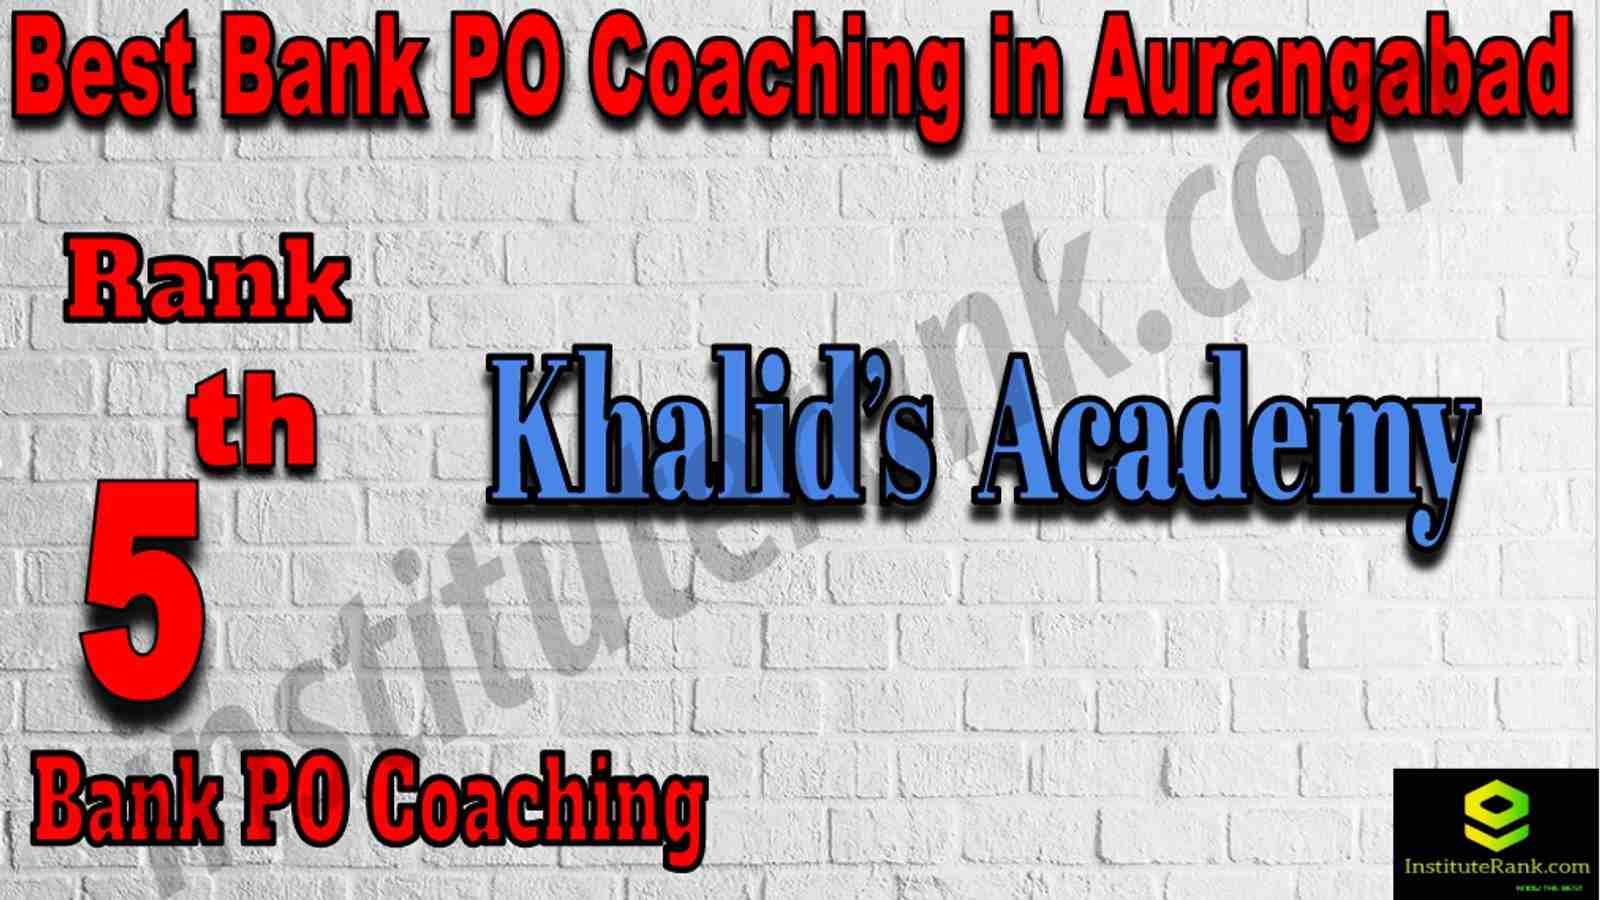 5th Best Bank PO Coaching in Aurangabad